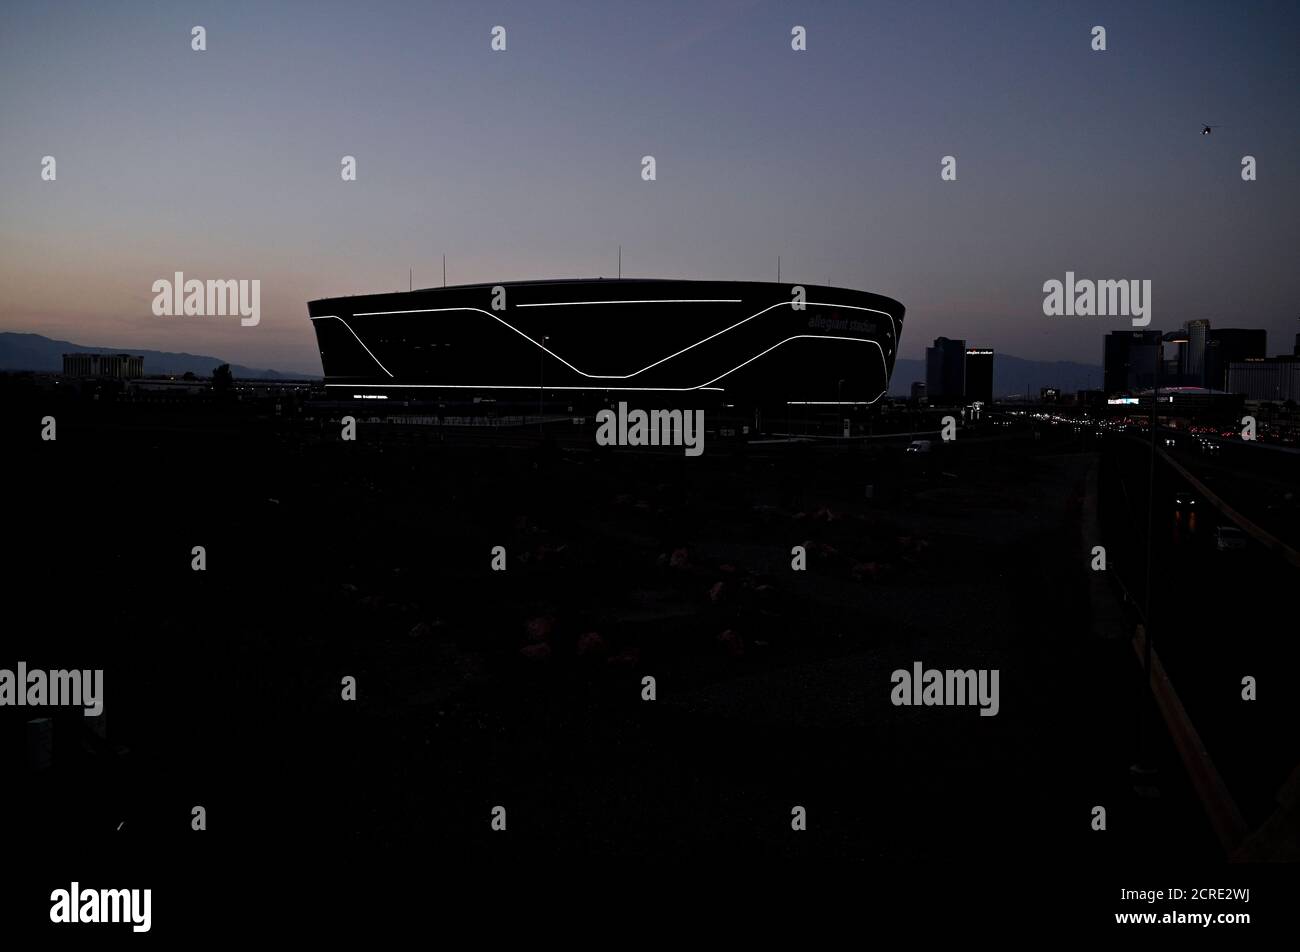 Las vegas stadium raiders hi-res stock photography and images - Alamy